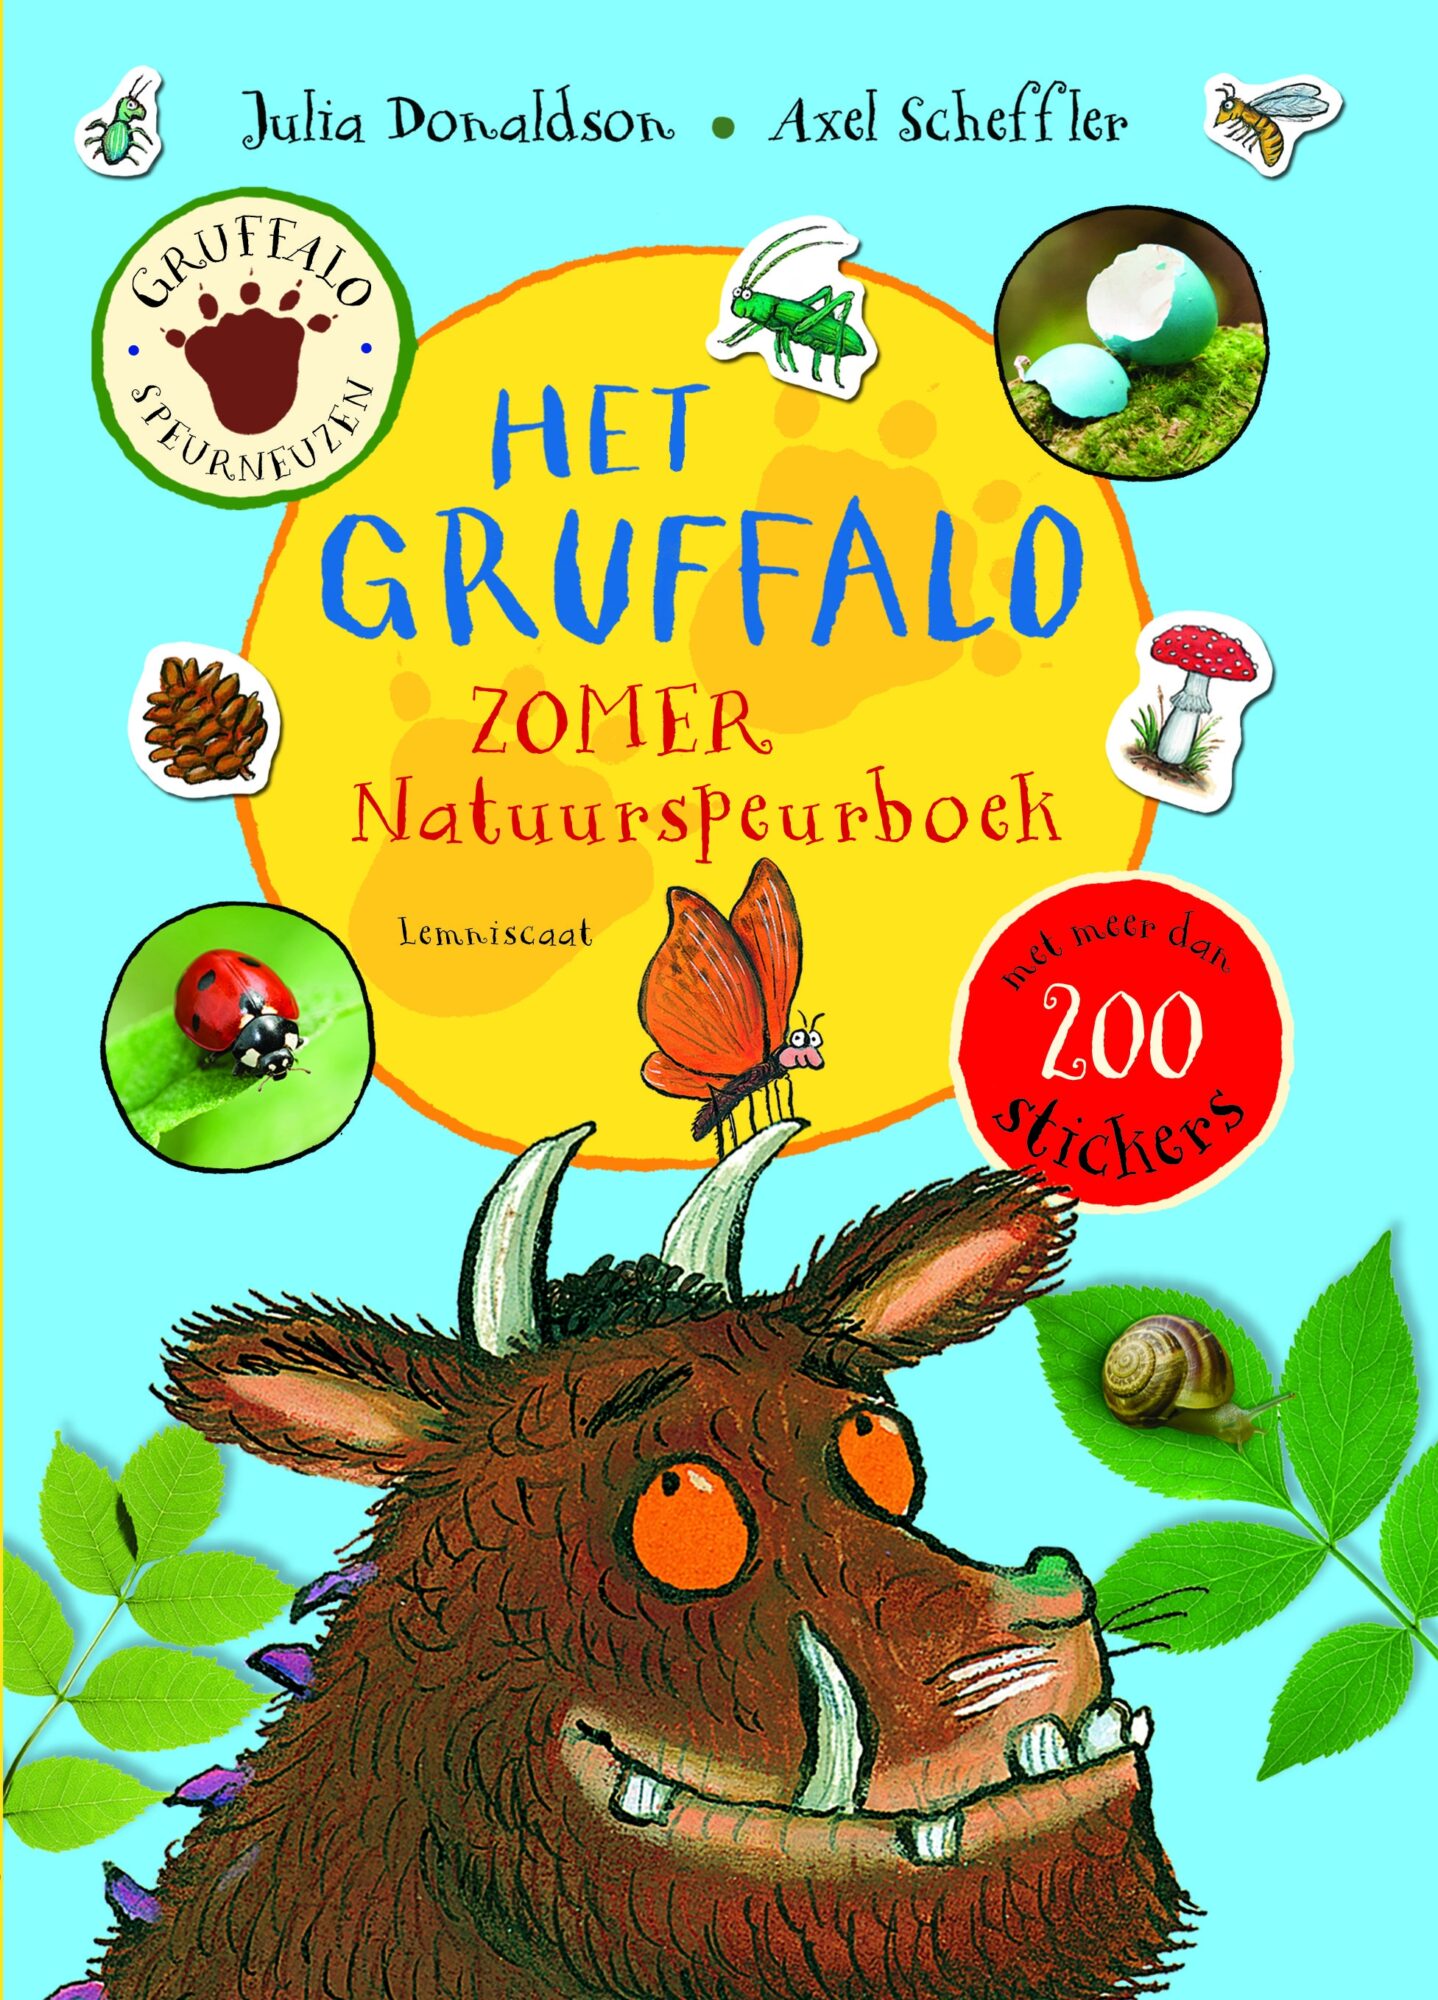 De Gruffalo zomer natuurspeurboek